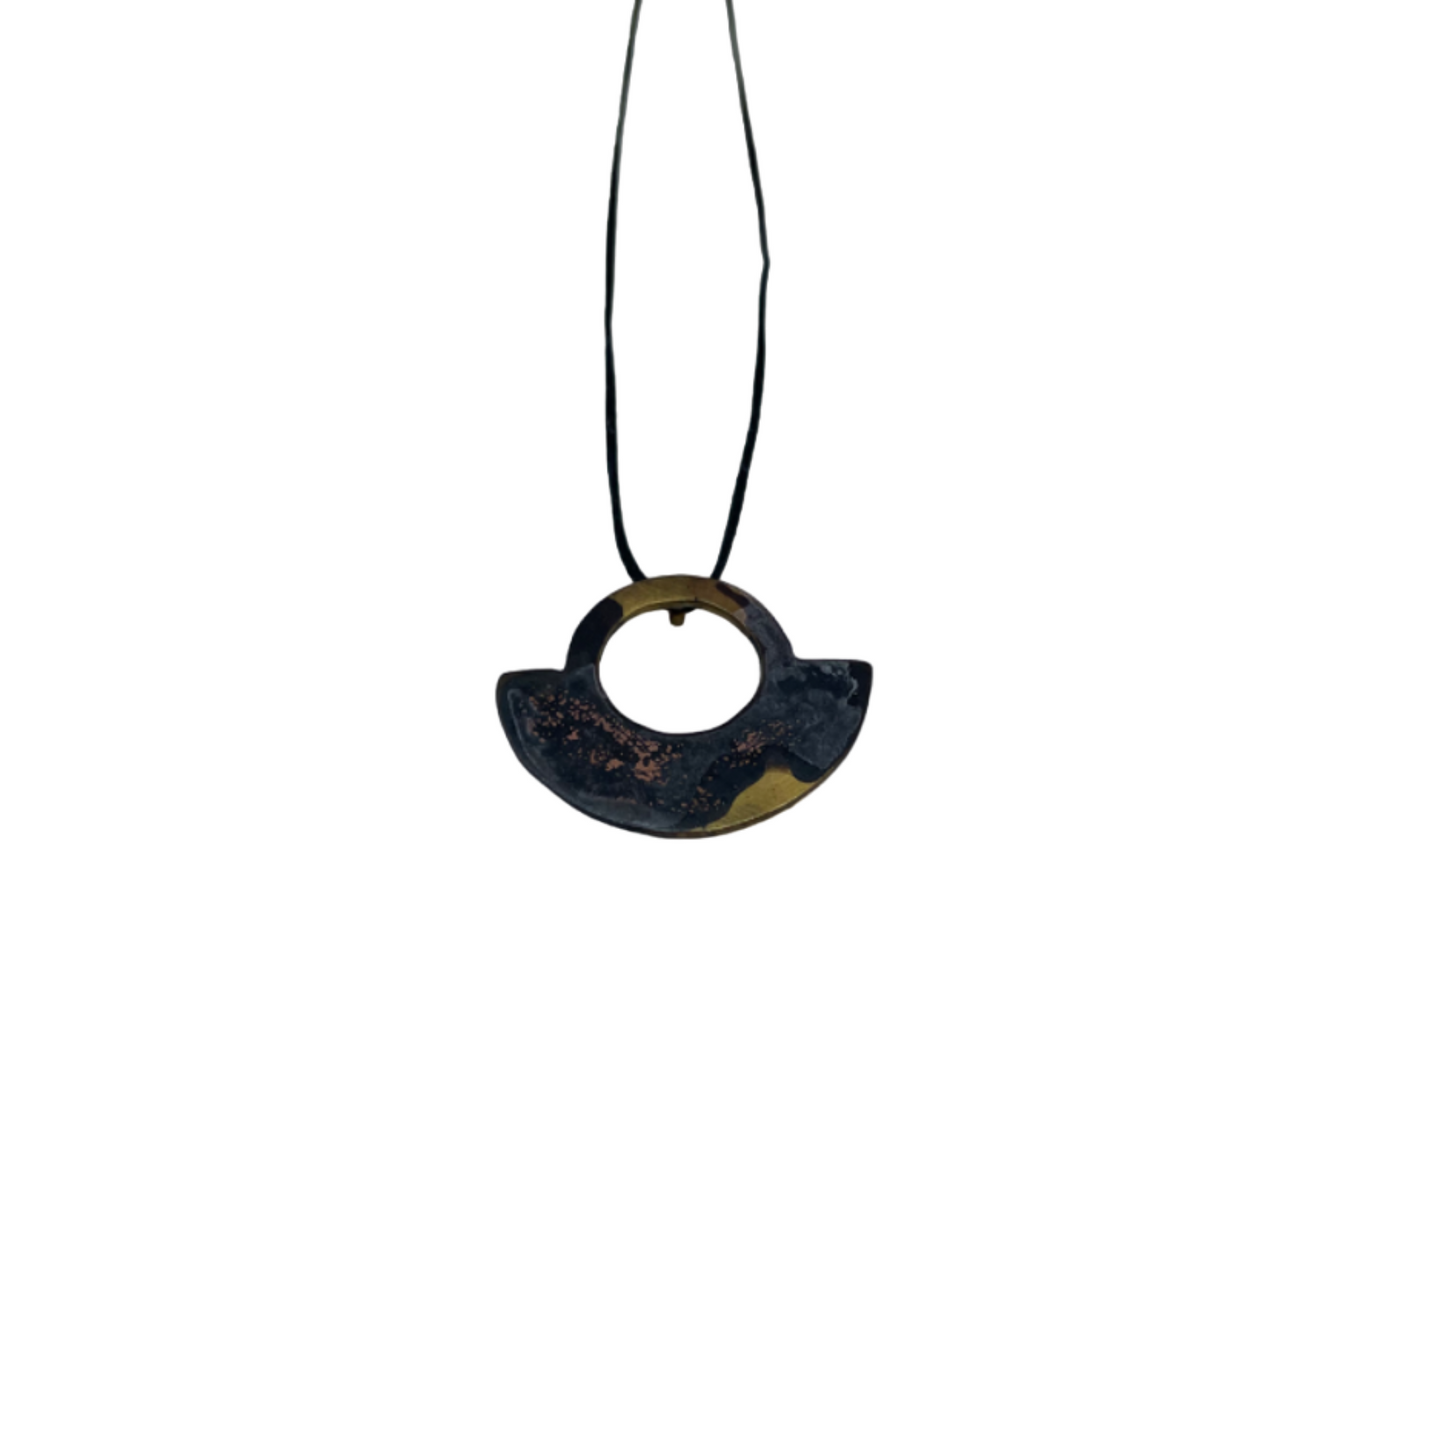 Oxidised brass necklace | Yellow - Black Balancing Necklace - CURIUDO